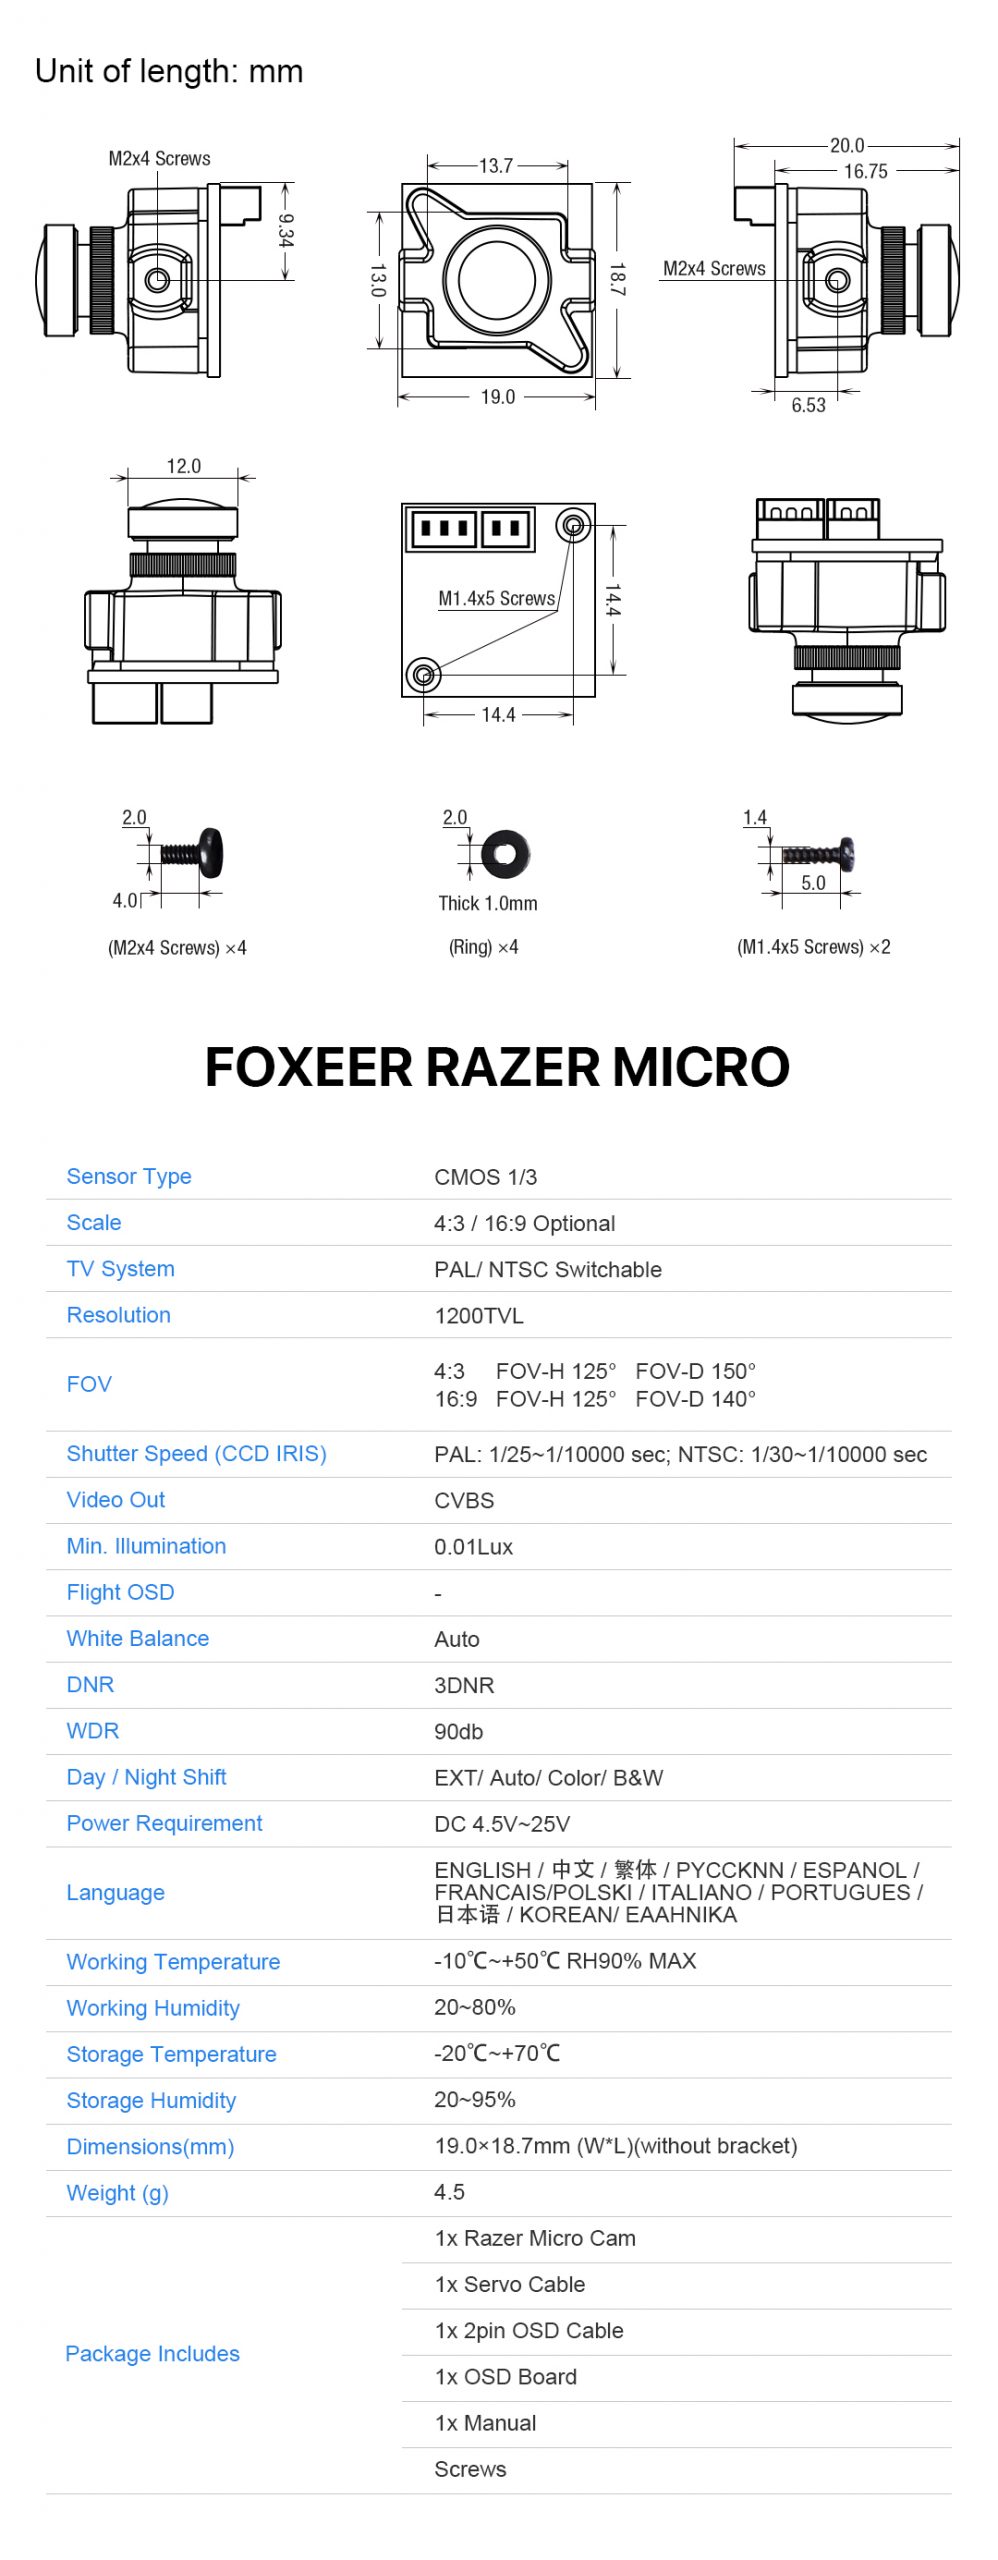 Foxeer Razer Micro 1200TVL 4:3 PAL/NSTC CMOS FPV Camera (1.8mm) - Black 12 - Foxeer